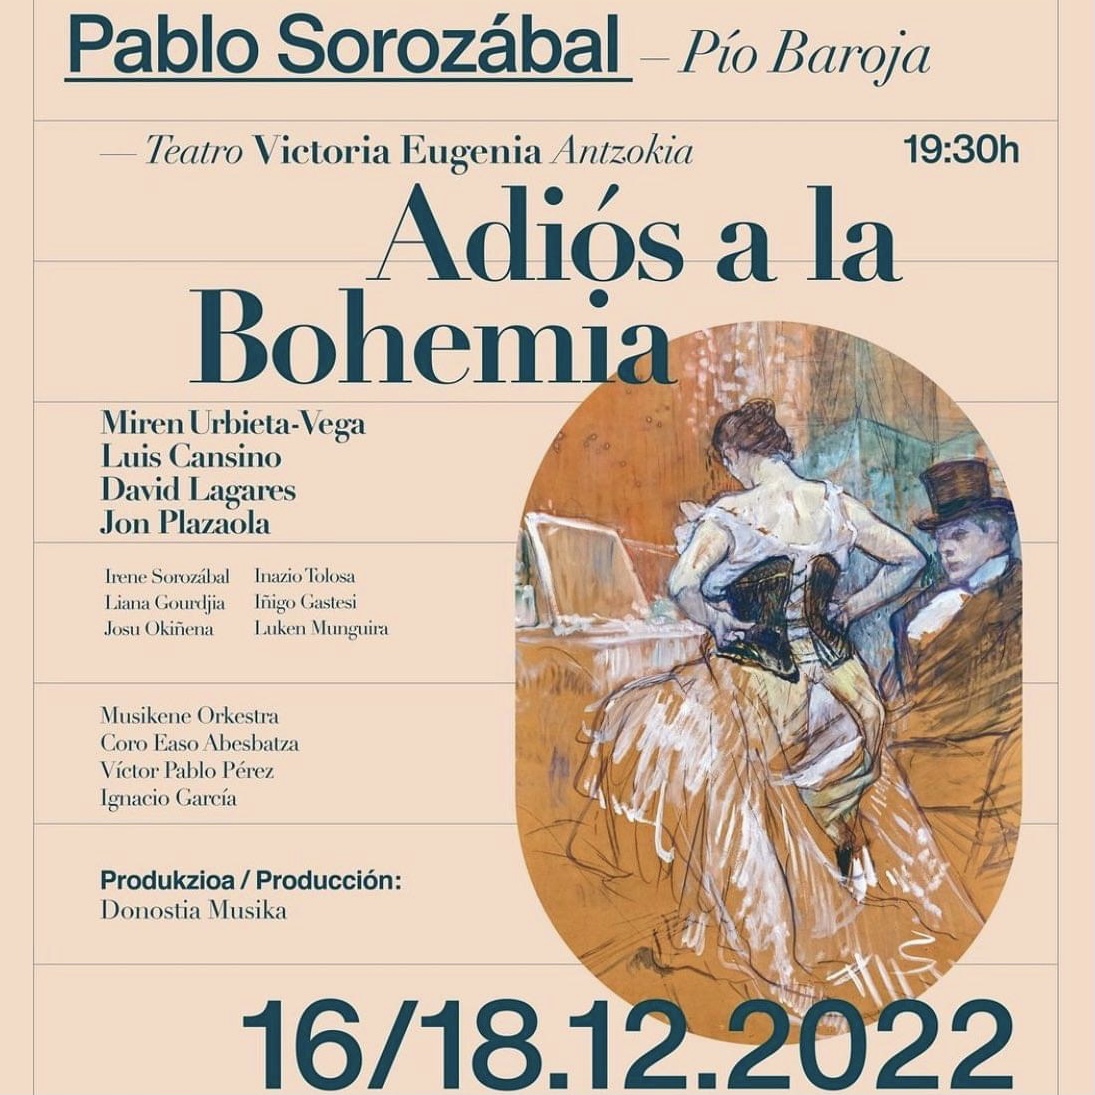 Cartel promocional de "Adiós a la bohemia" / © Donostia Musika